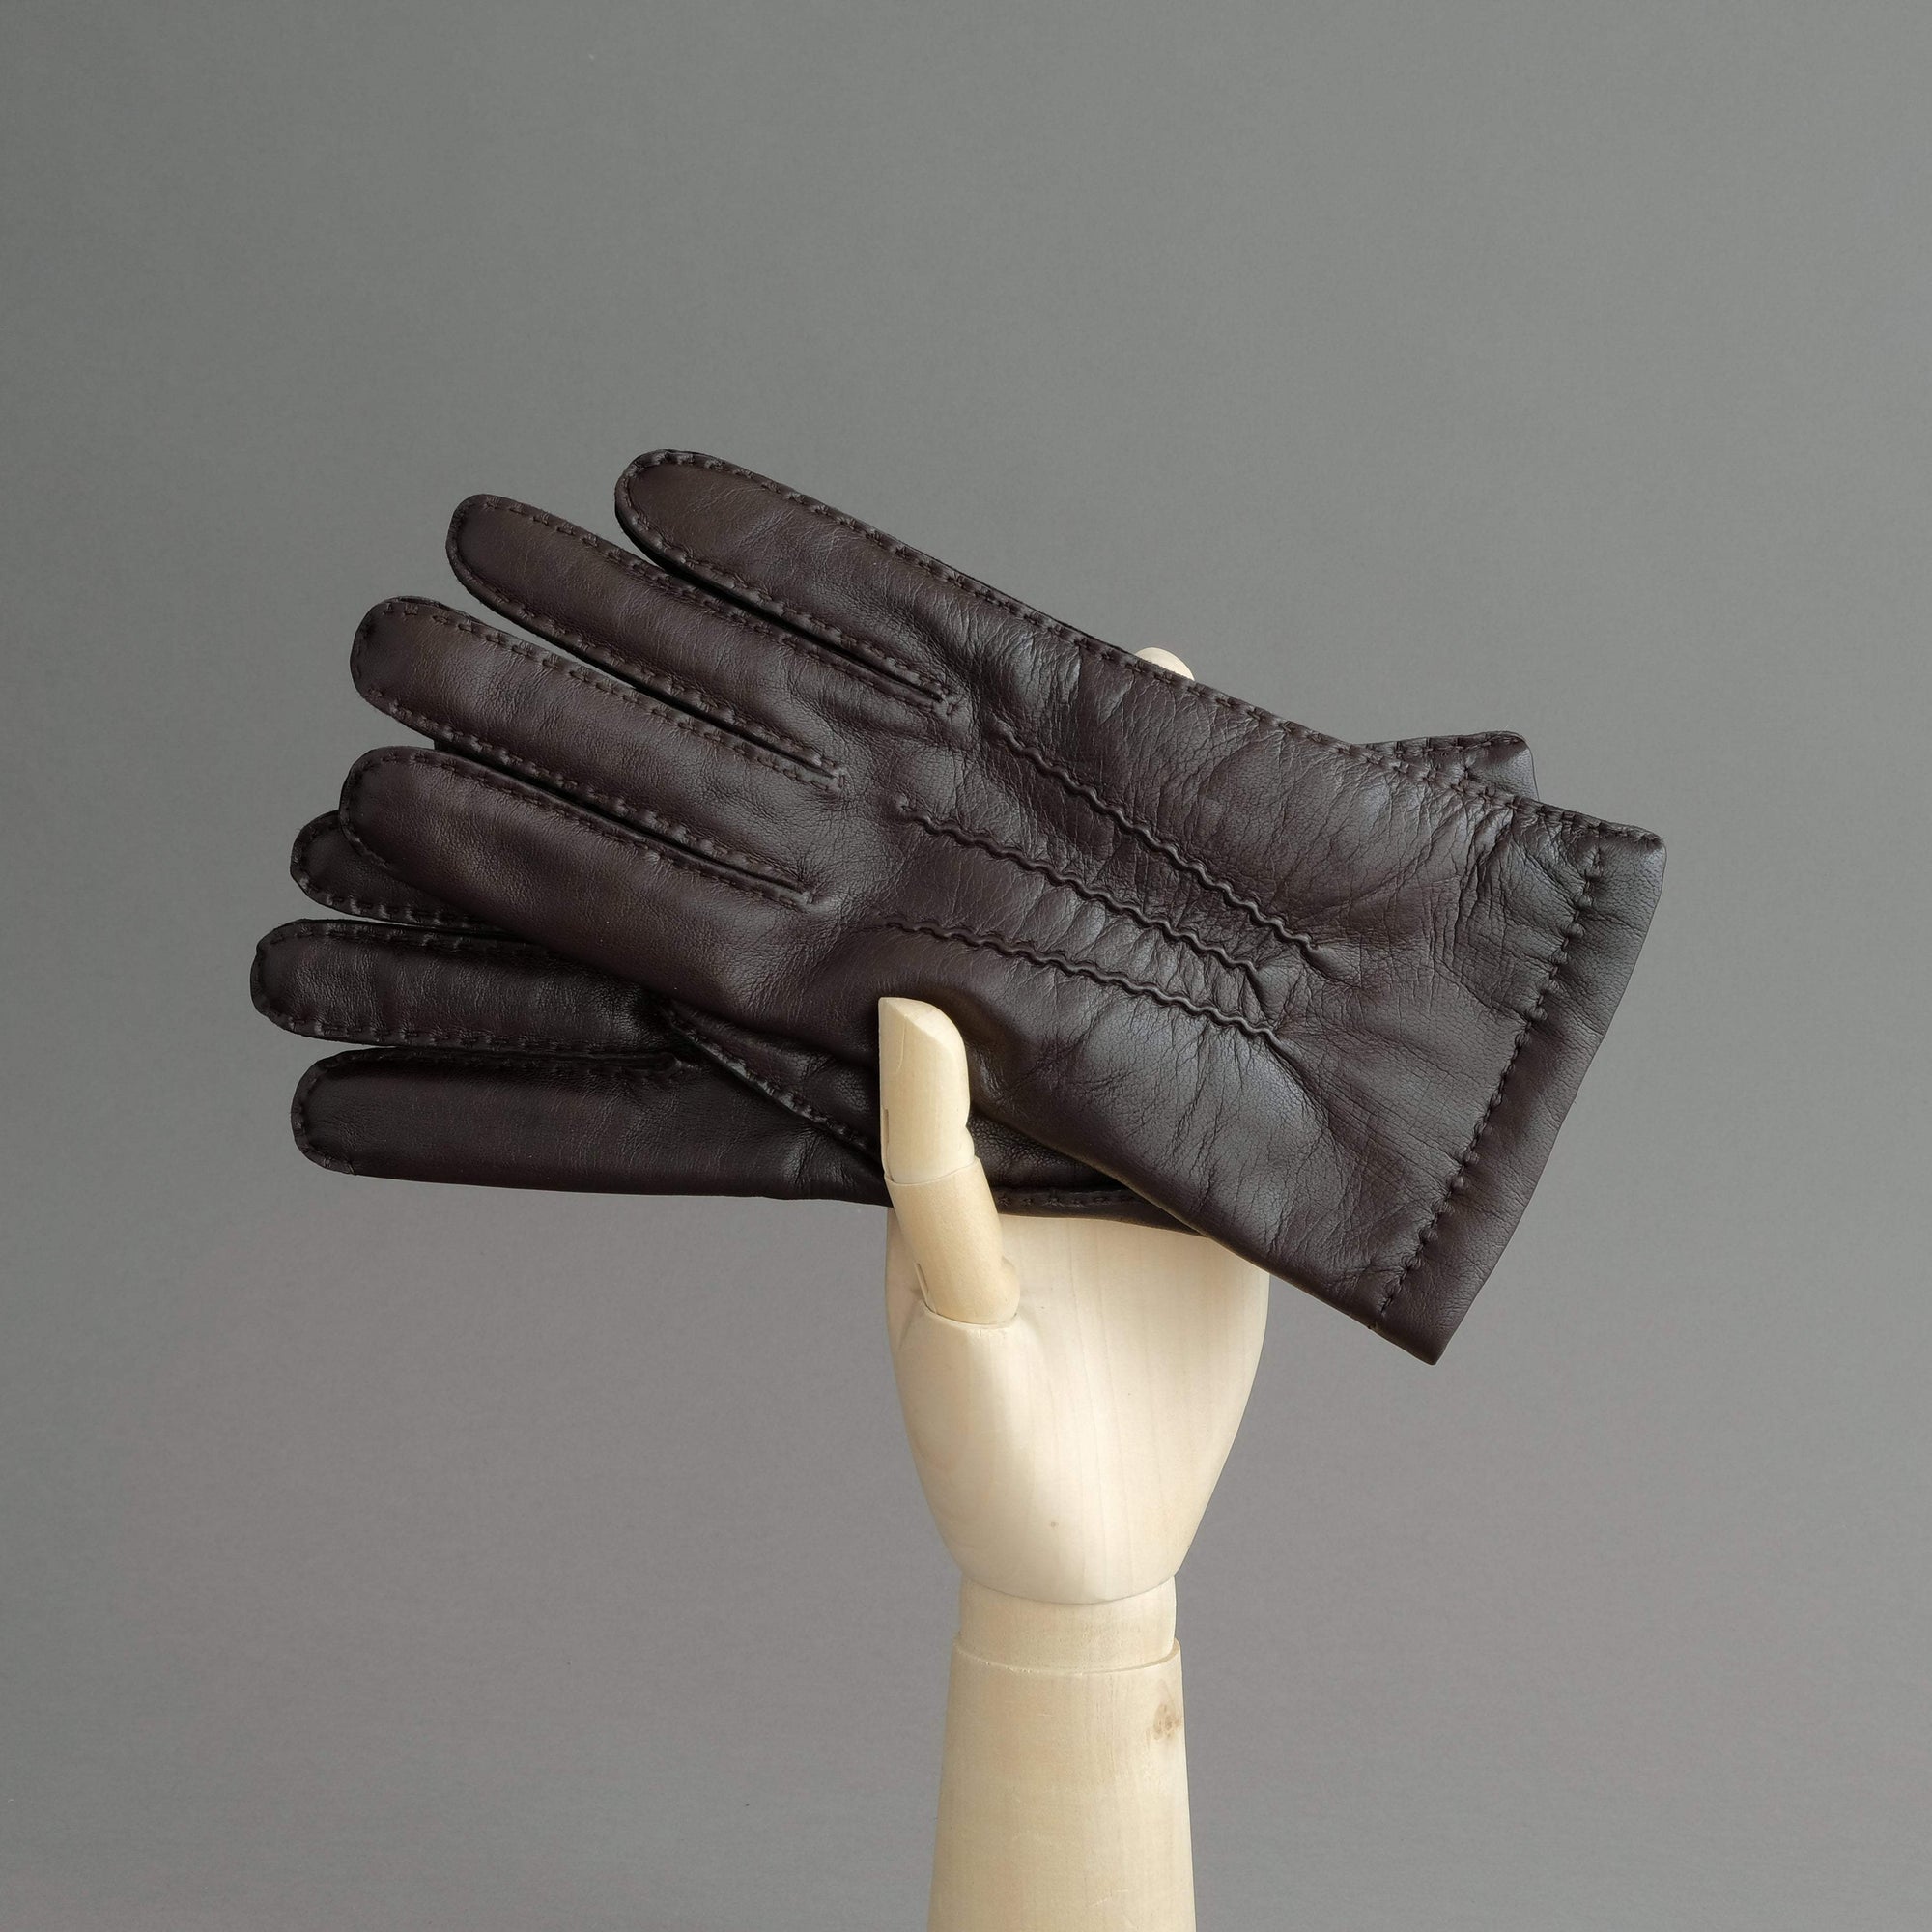 Gentlemen's Gloves from Dark Brown Hair Sheep Nappa Lined with Cashmere - TR Handschuhe Wien - Thomas Riemer Handmade Gloves